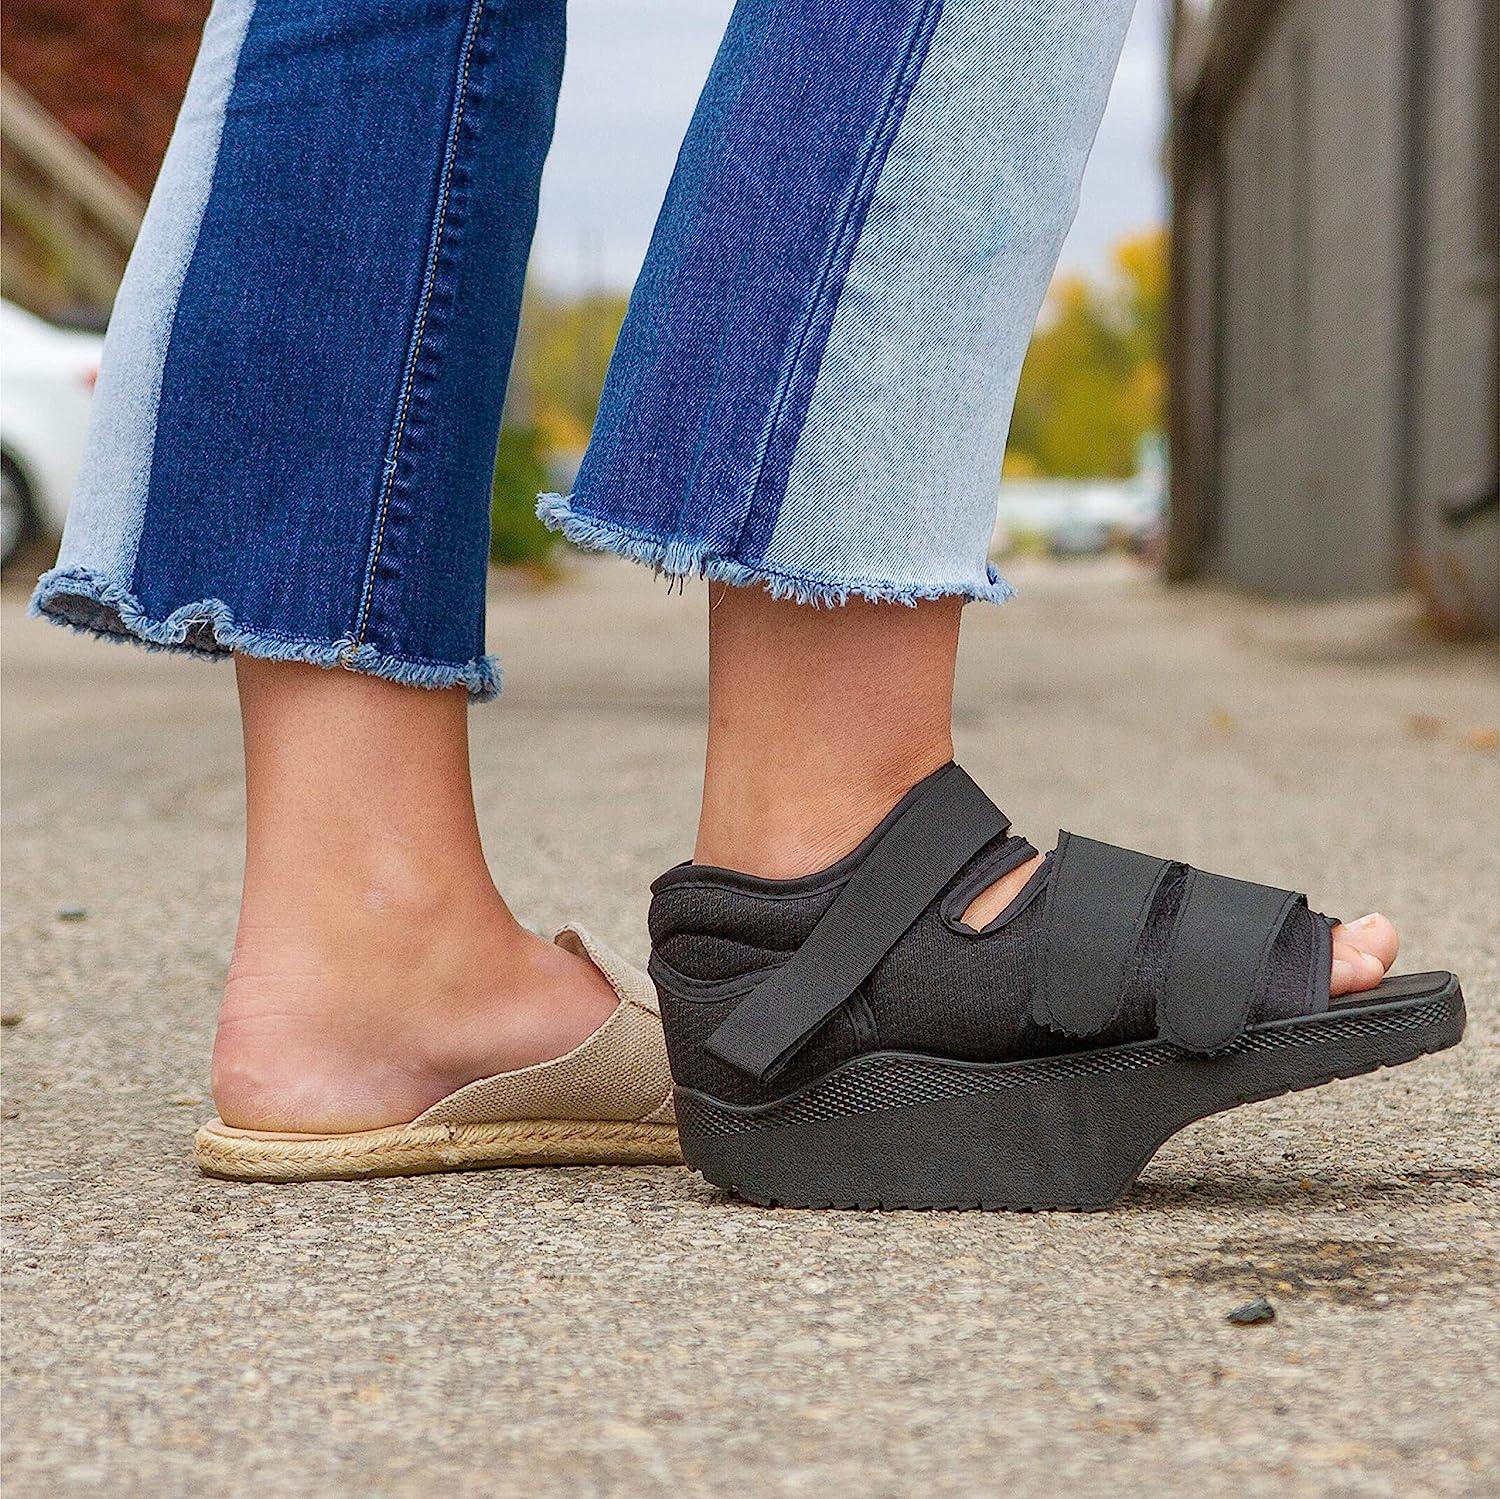 S)Orthopedic Foot Brace Weight Bearing Lightweight Healing Shoe For | eBay